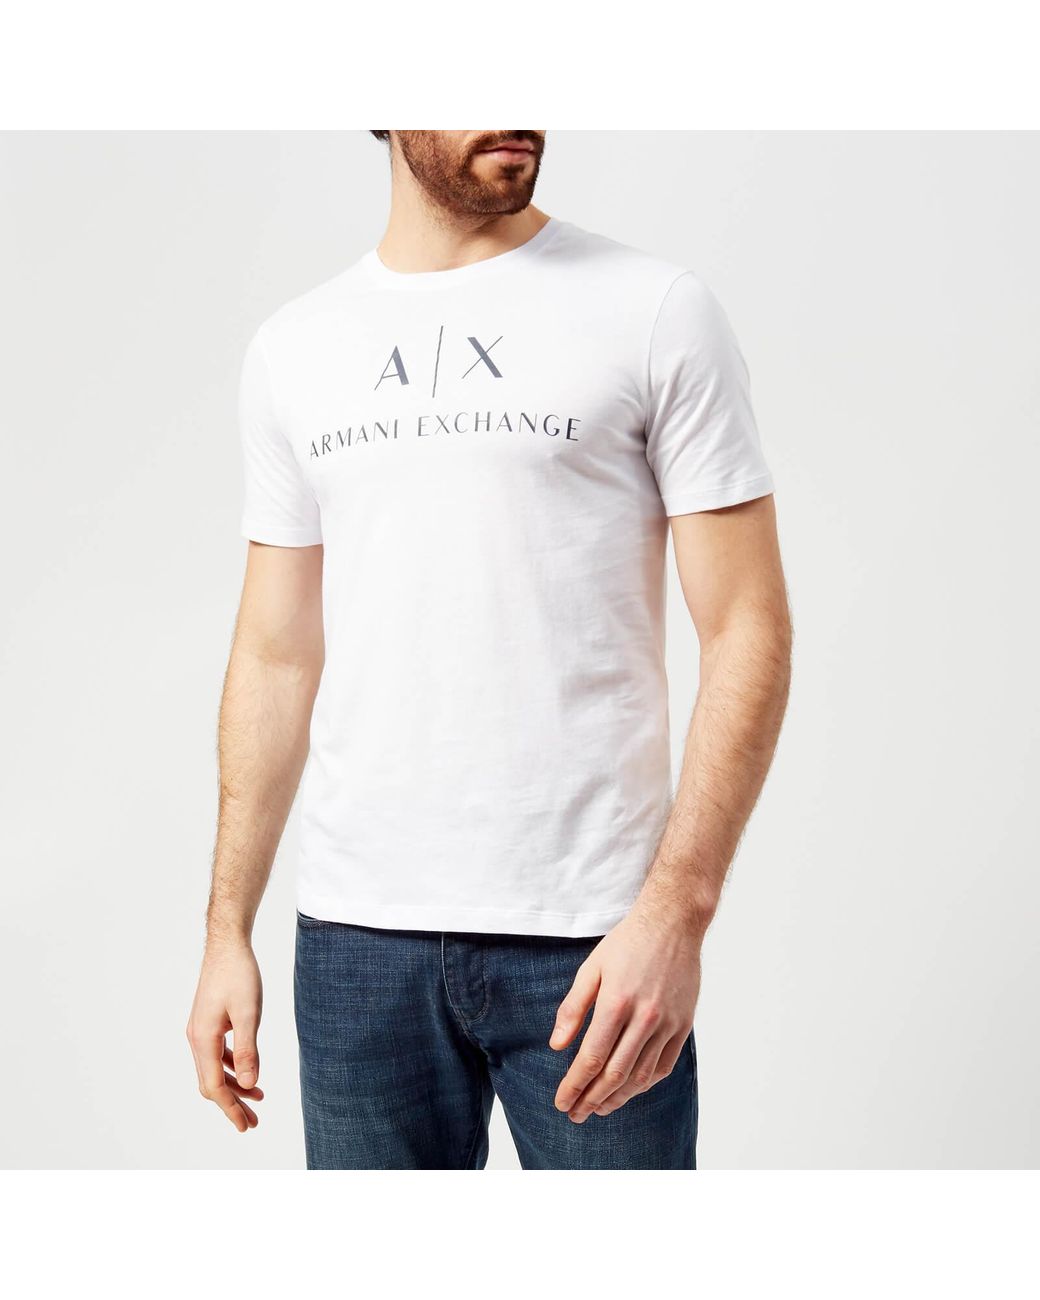 Ax Armani Exchange Logo | lupon.gov.ph